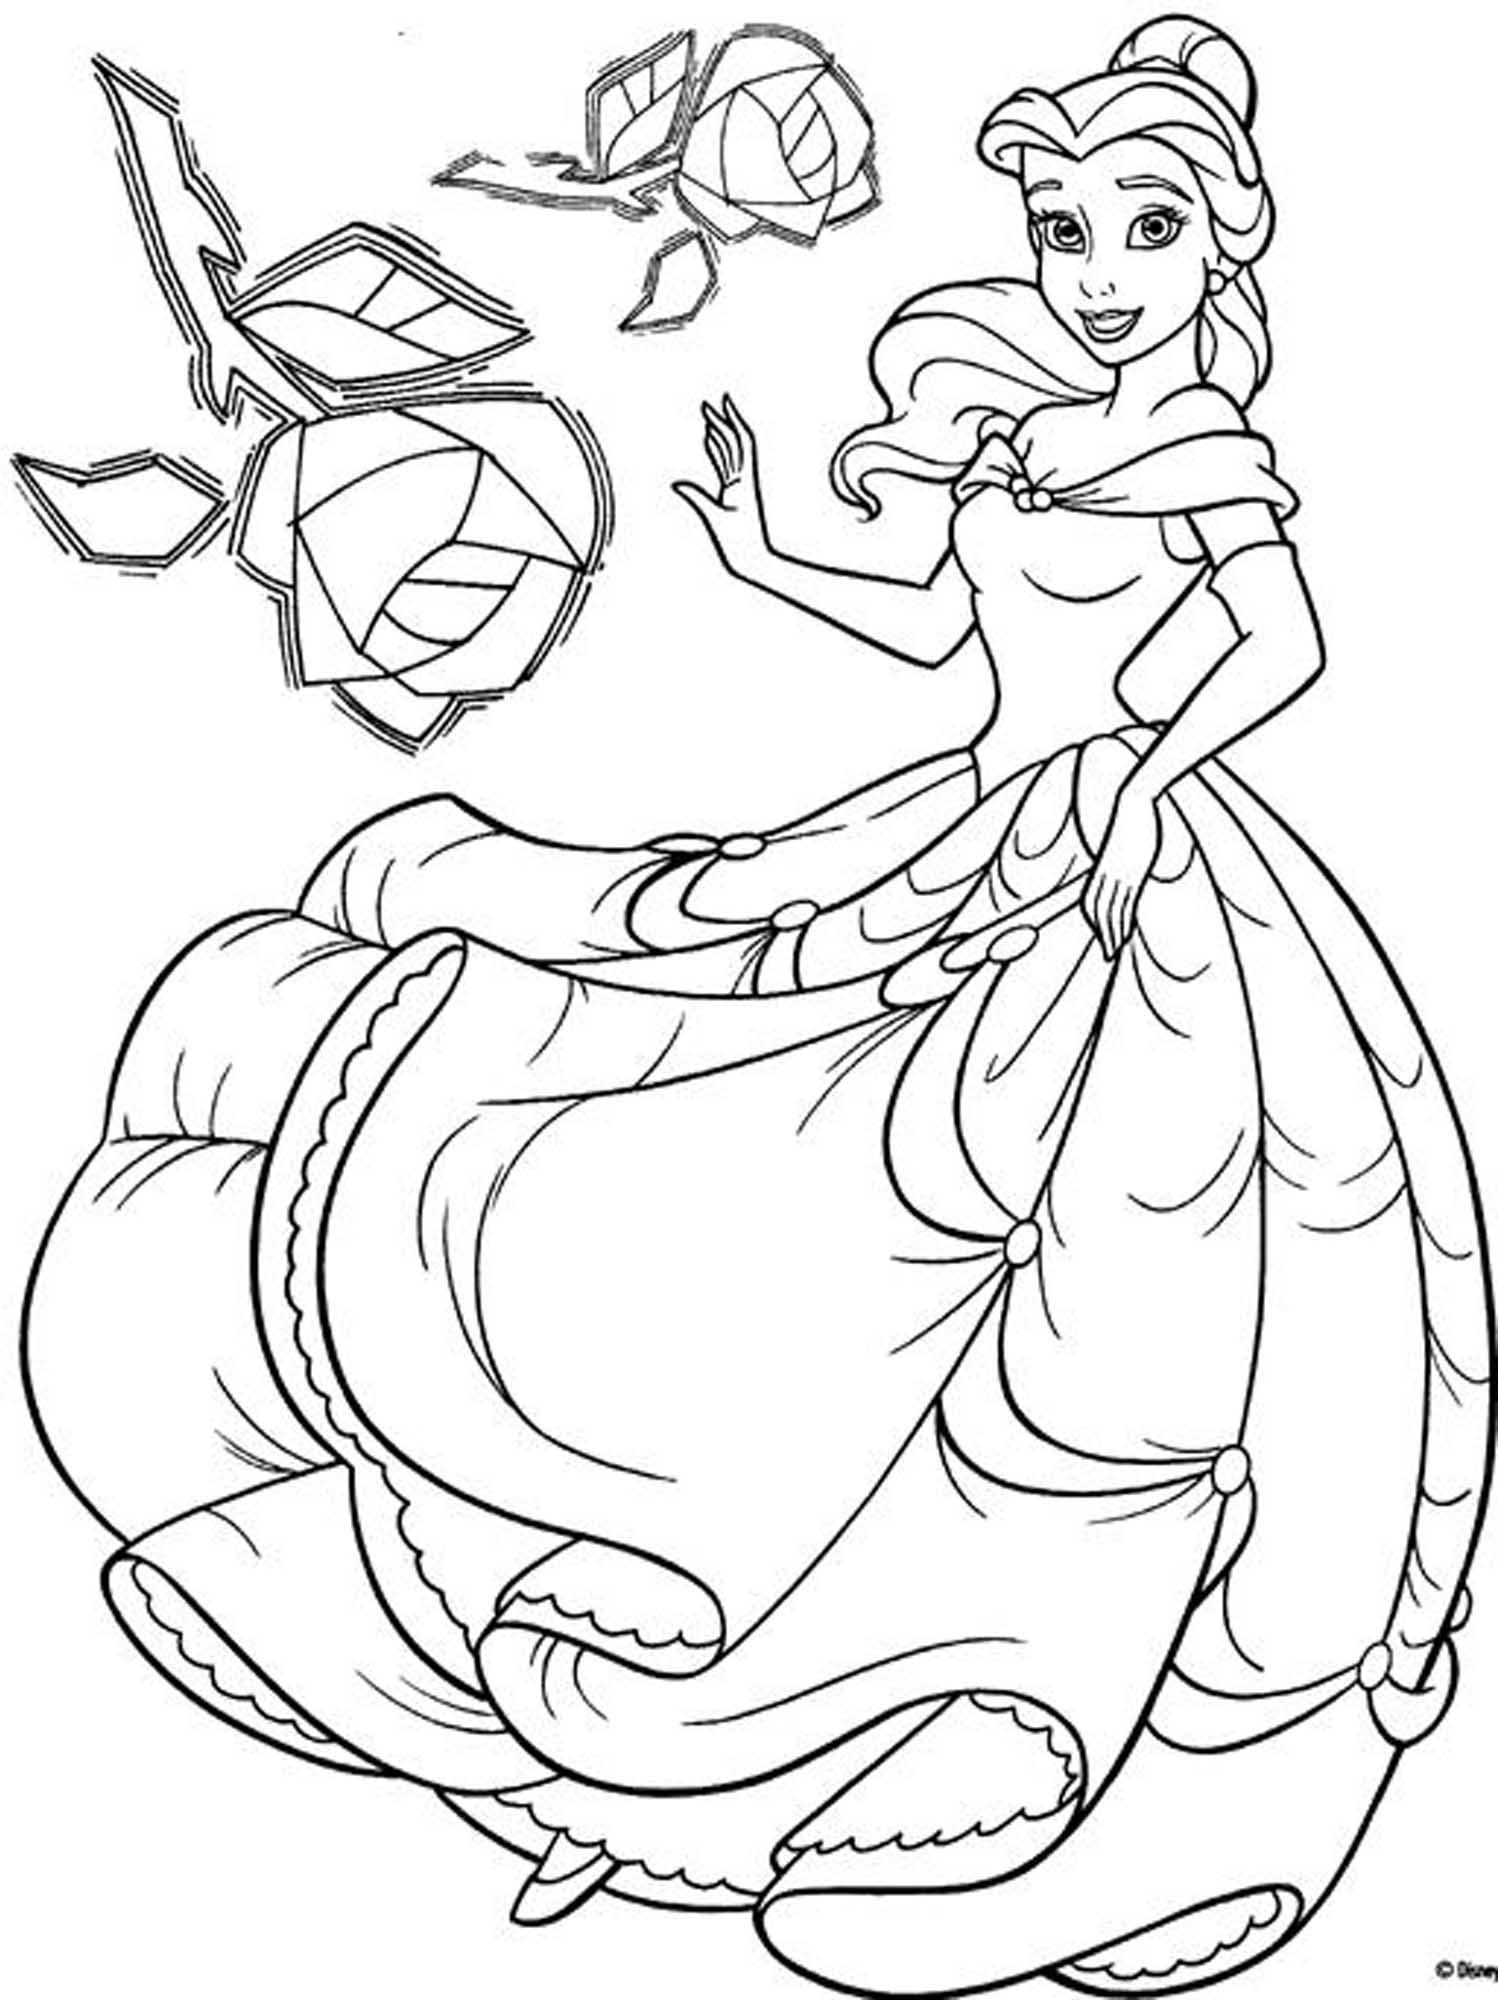 Belle Disney Princess Coloring Pages at GetDrawings | Free ...